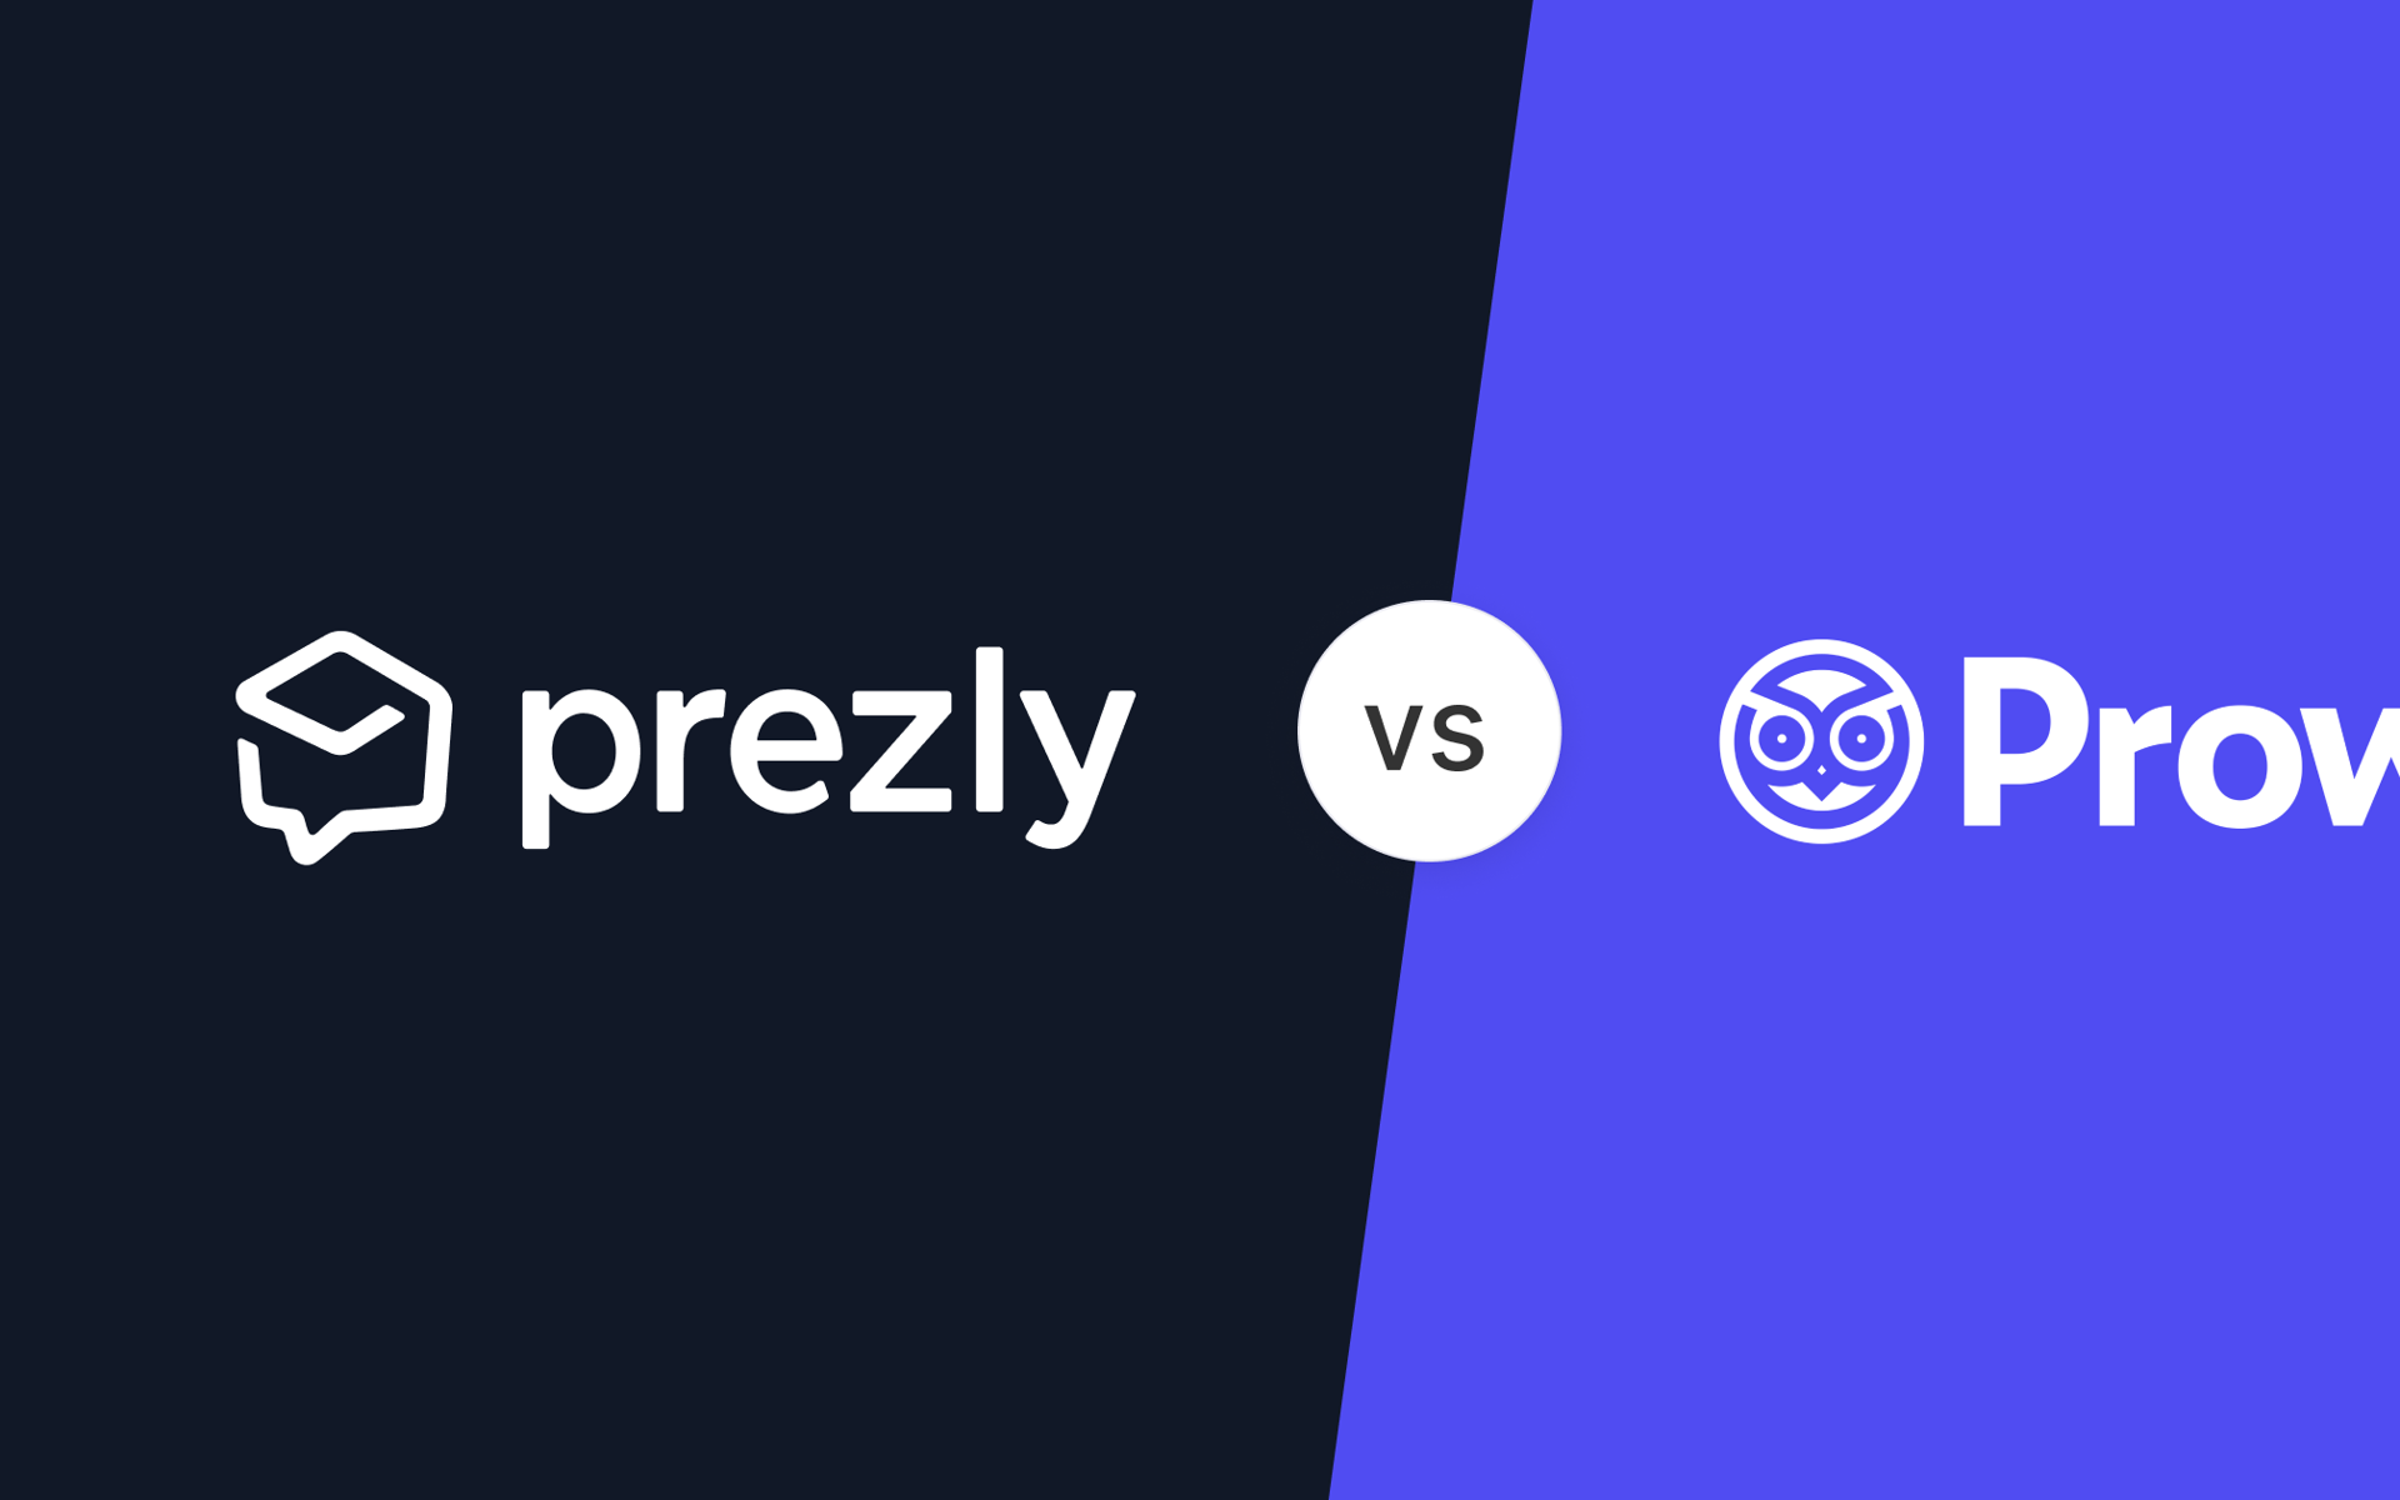 Prezly vs. Prowly